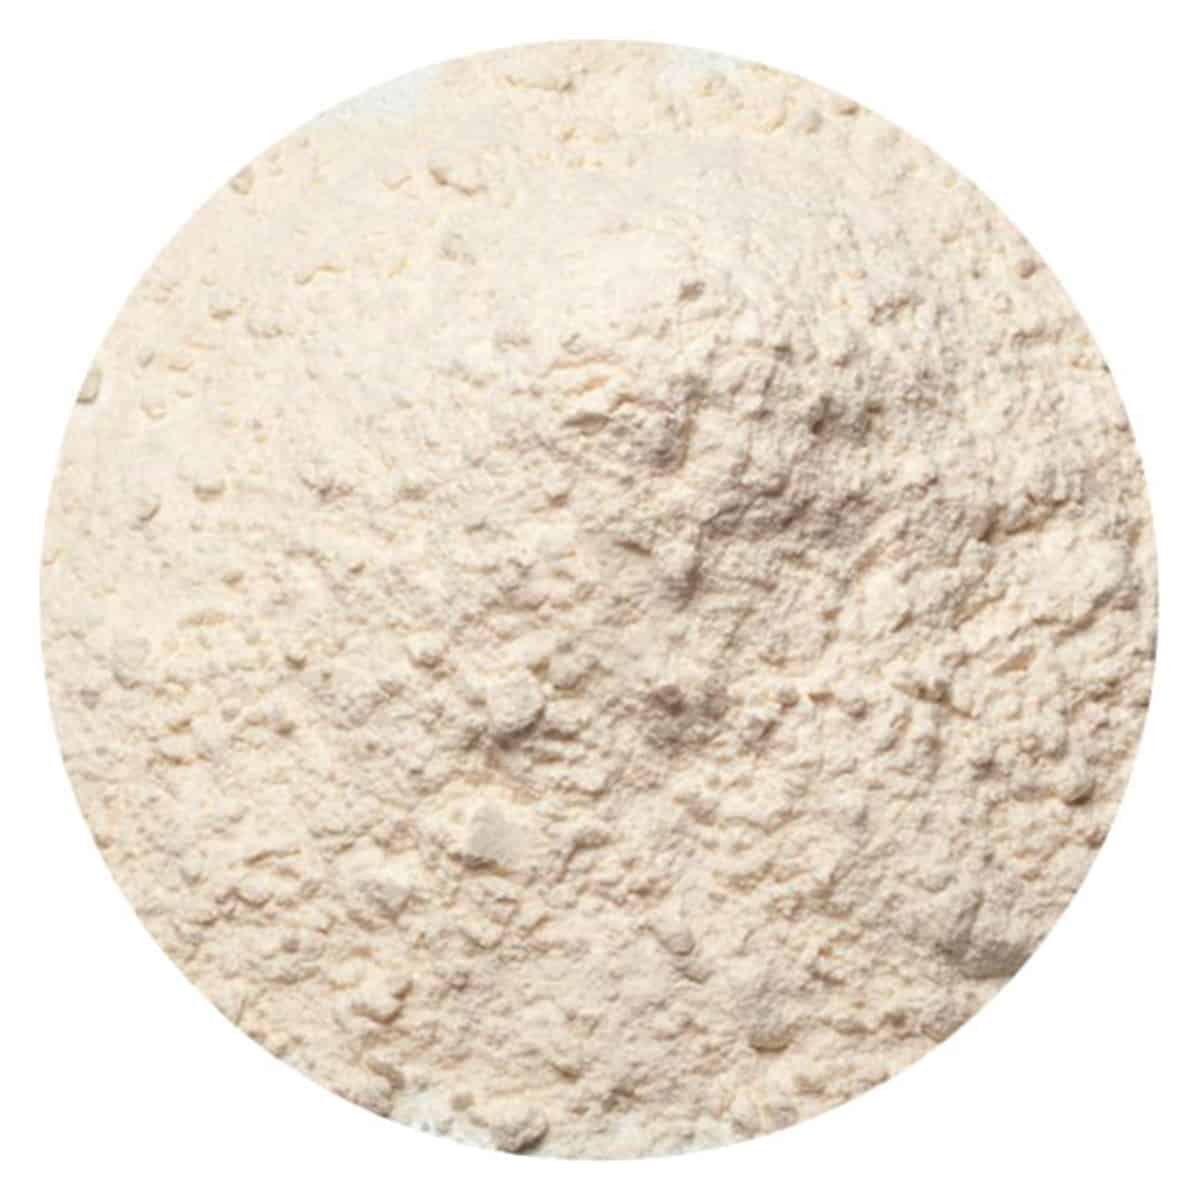 Buy IAG Foods Potato Flour - 1 kg